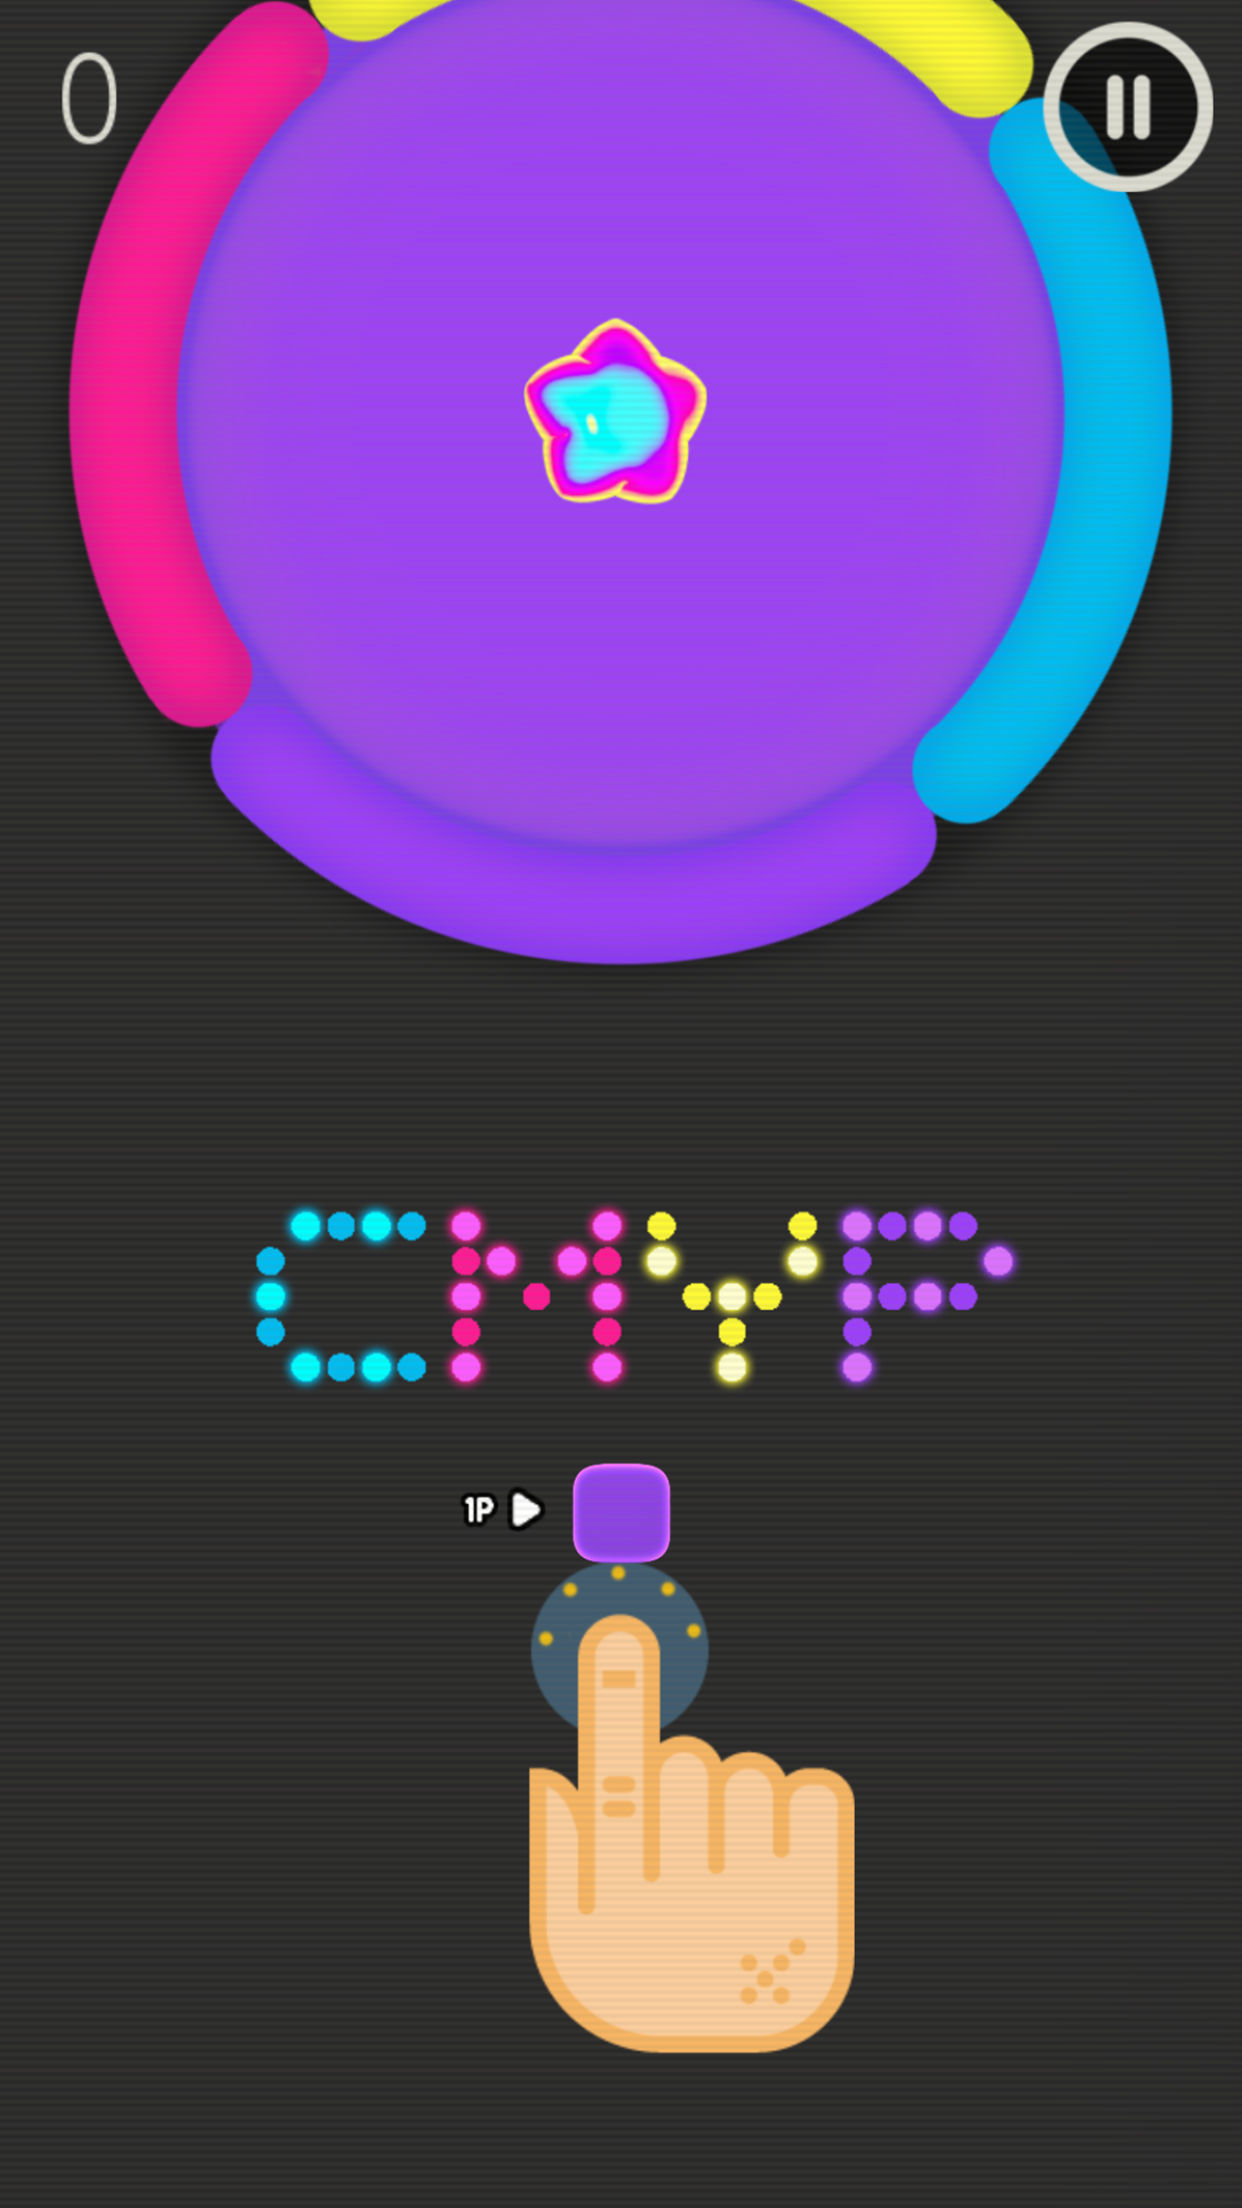 CMYP - Color Switch